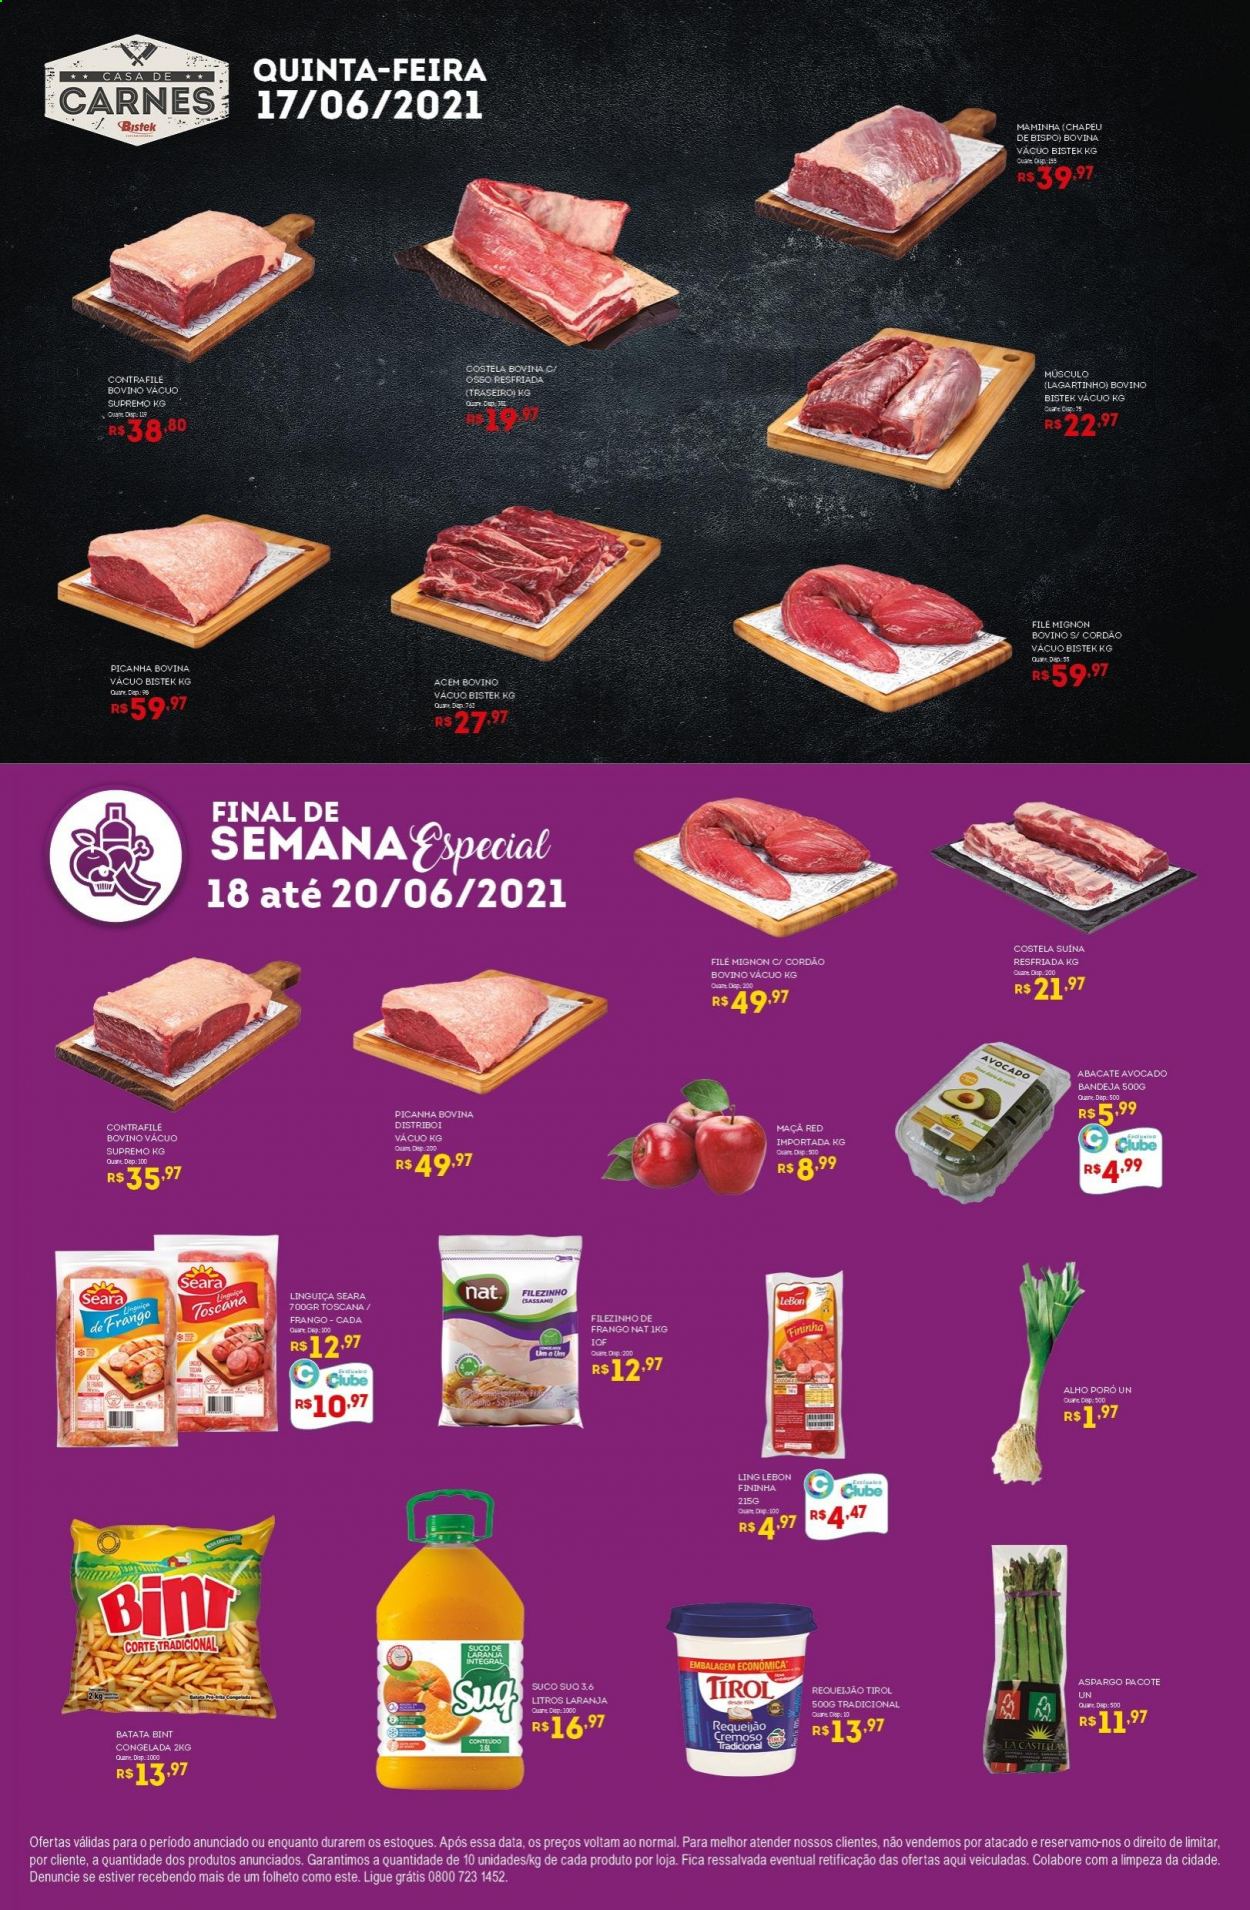 Encarte Bistek Supermercados  - 15.06.2021 - 20.06.2021.